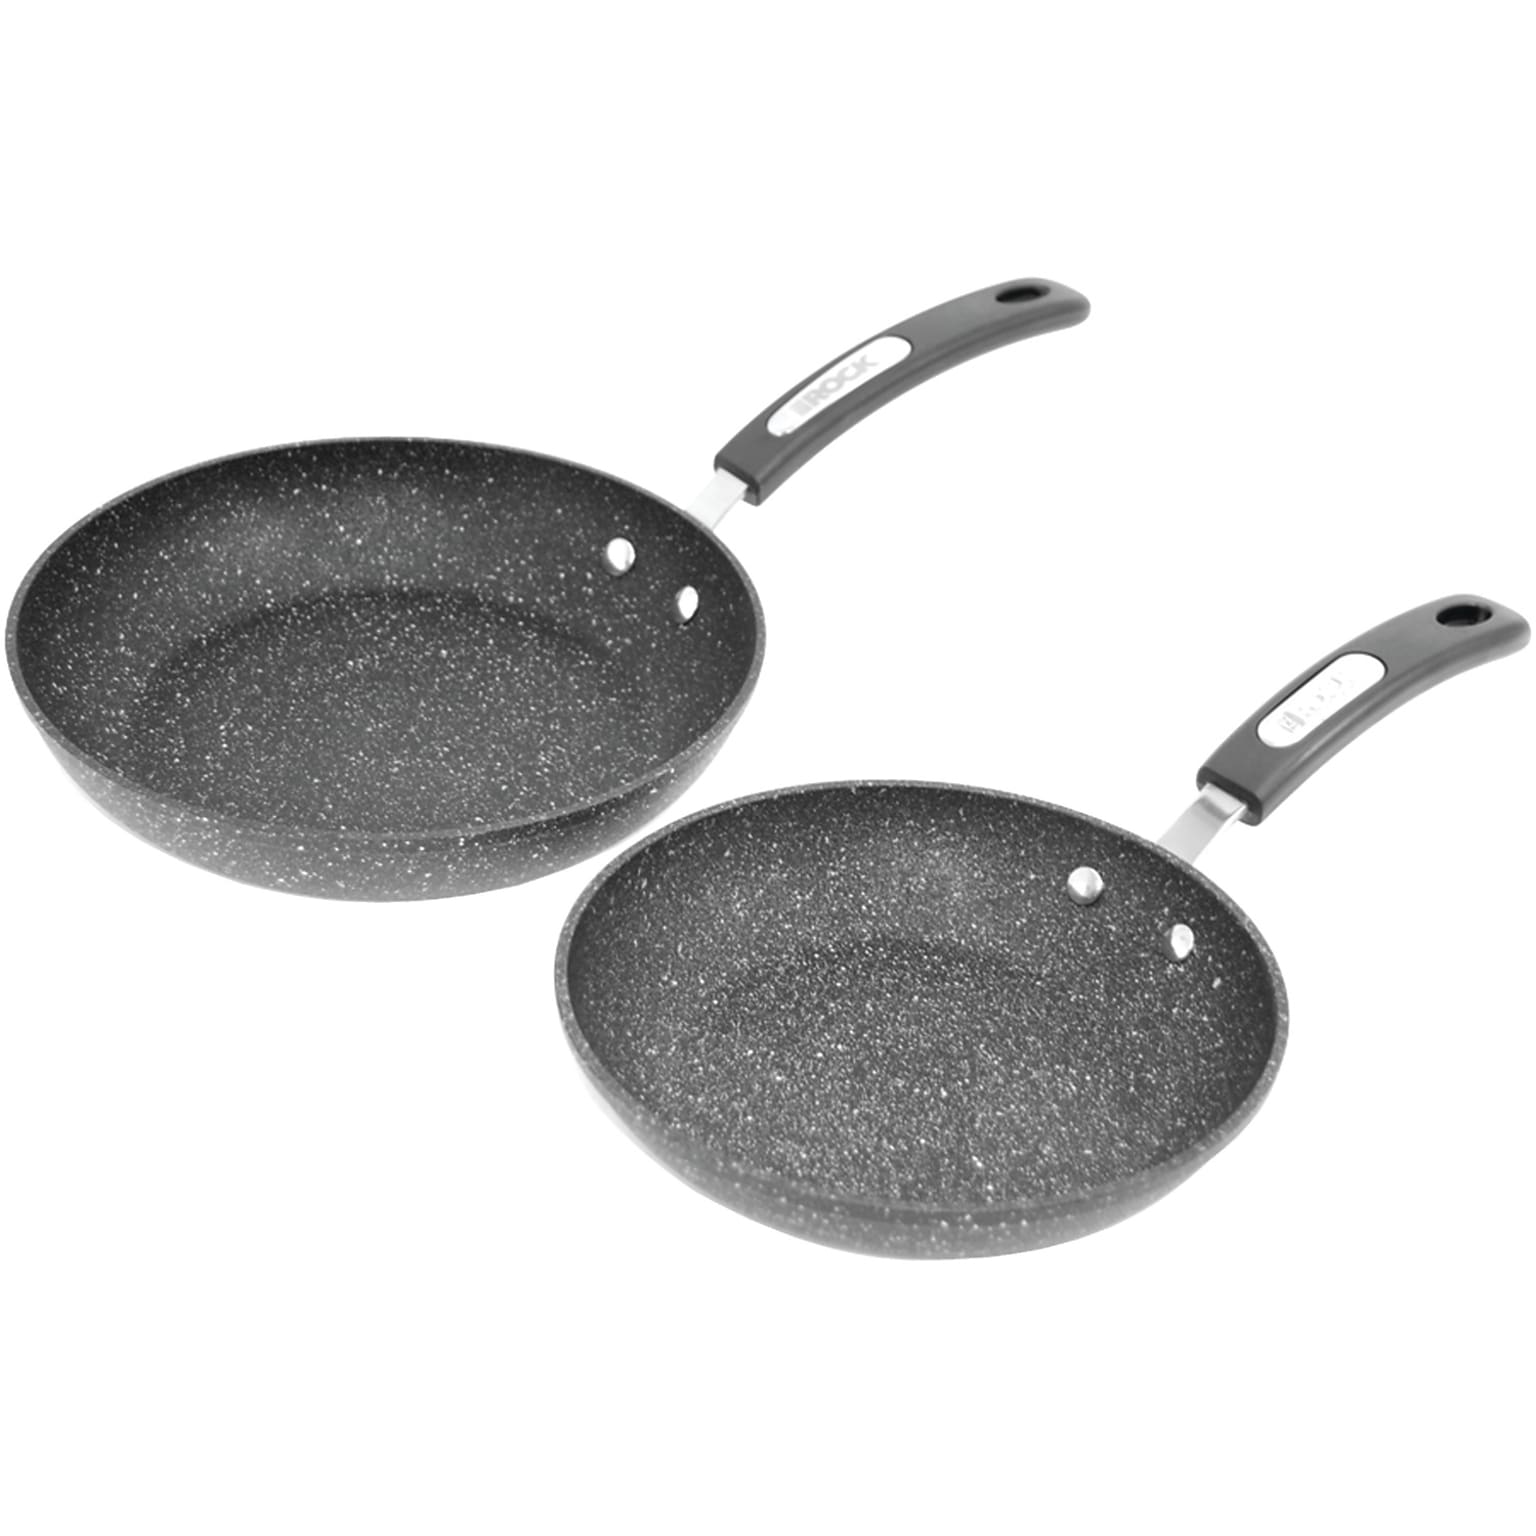 Starfrit Fry Pans with Bakelite Handles, Black, 2/Pack (SRFT060740)